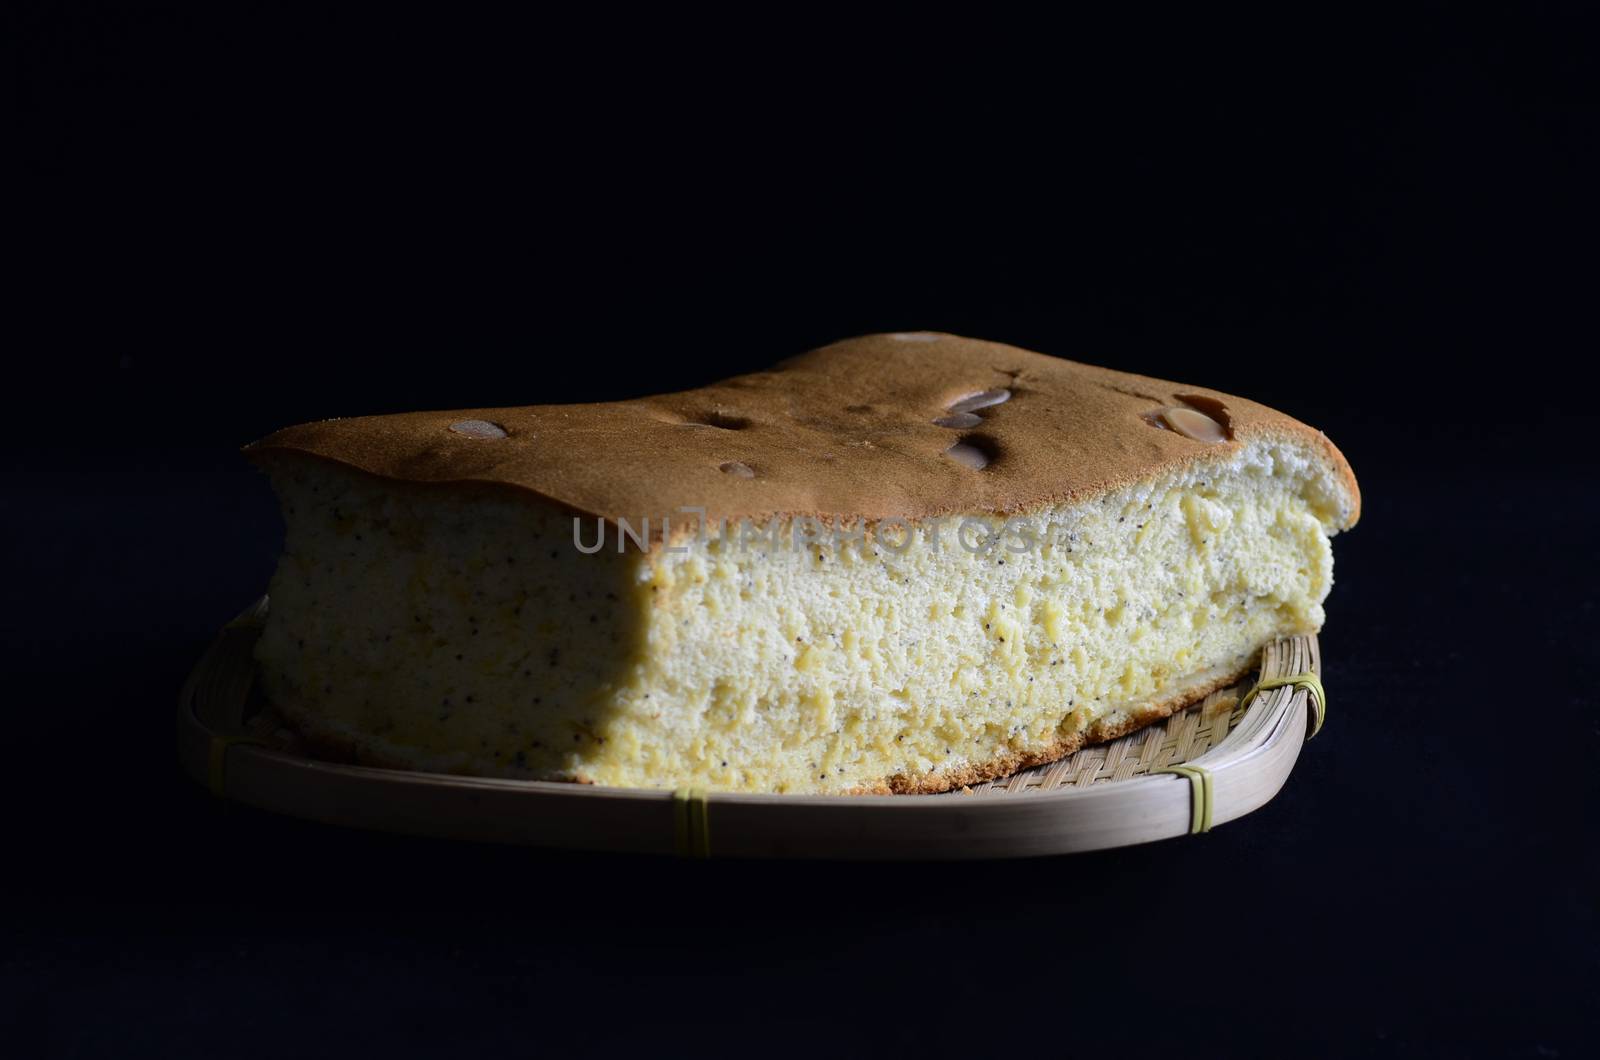 Lemon sponge cake by yongtick